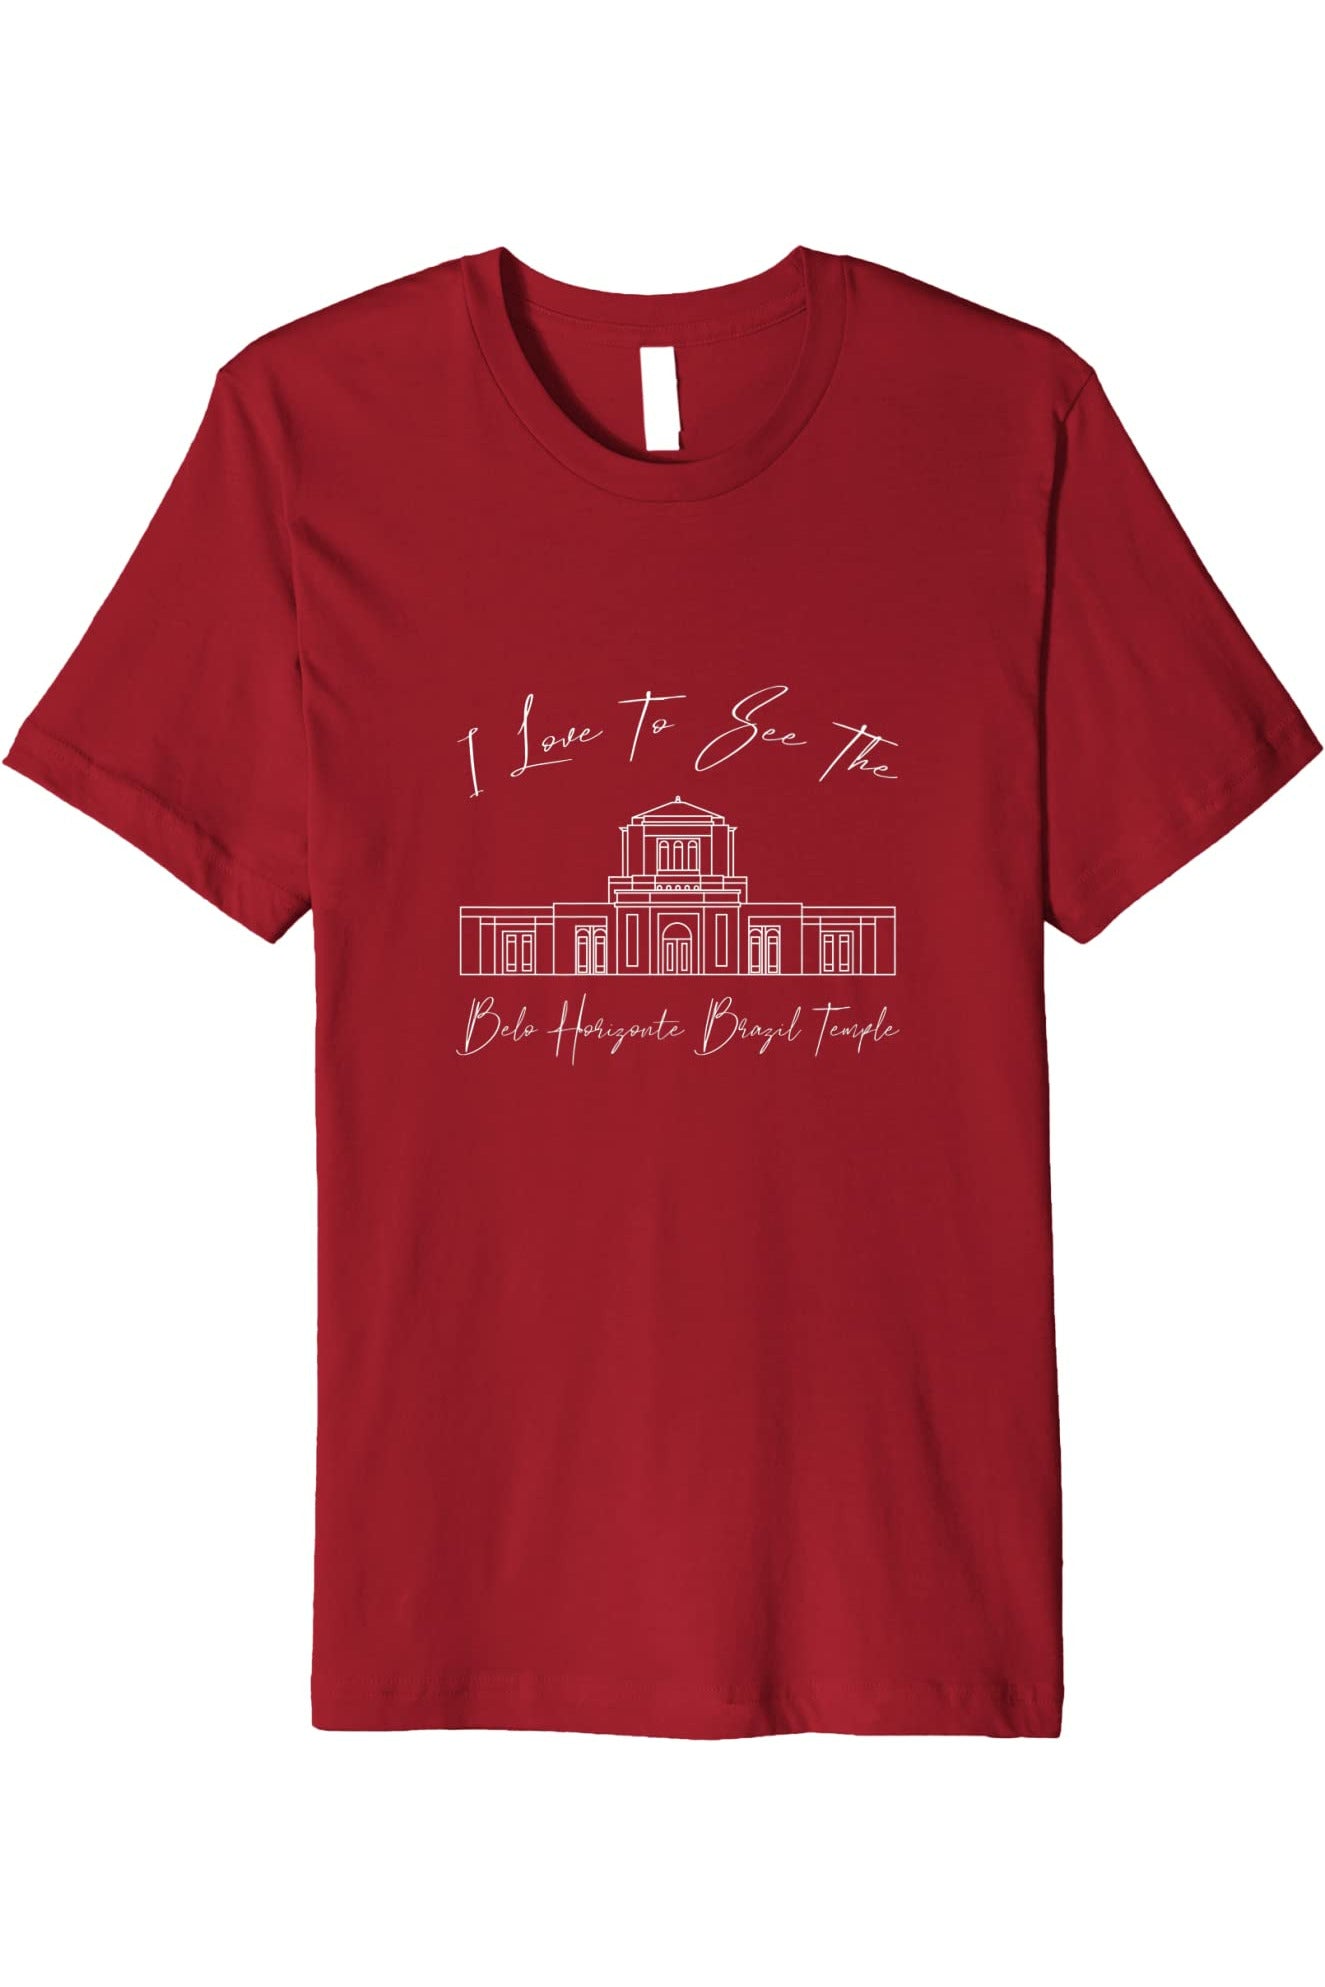 Belo Horizonte Brazil Temple T-Shirt - Premium - Calligraphy Style (English) US